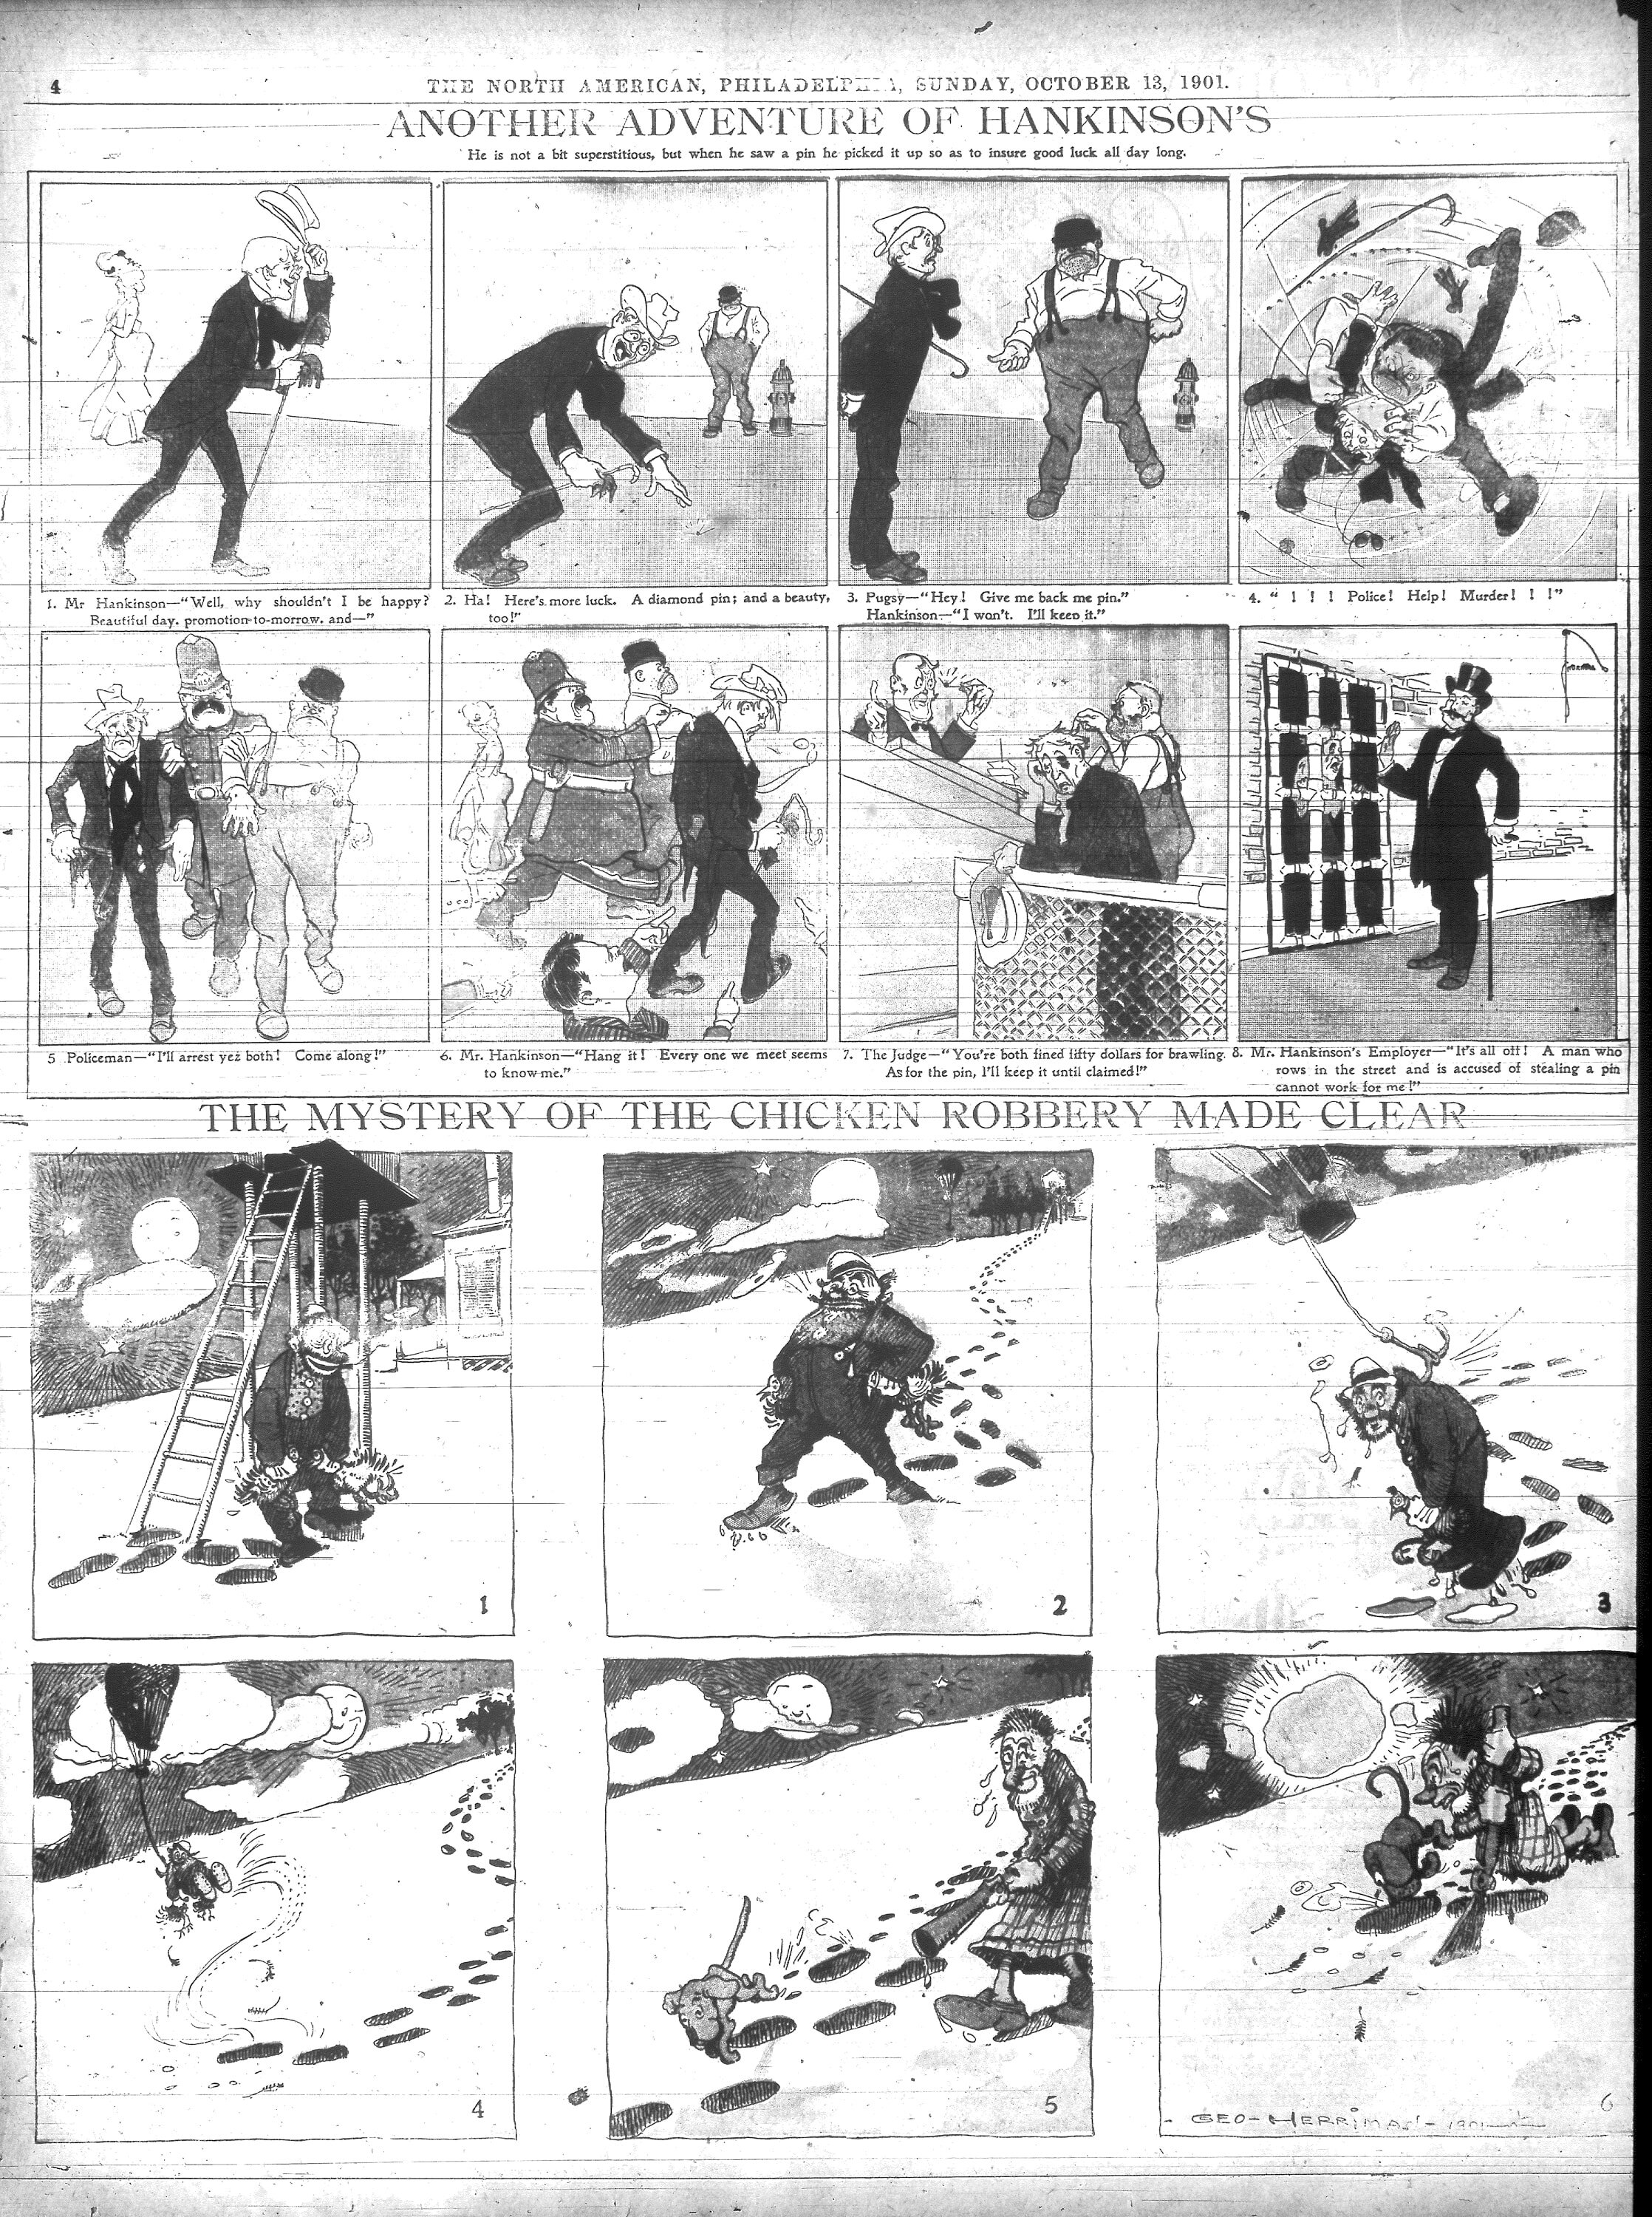 05-phillyna-10-13-1901-herriman-comic.jpg